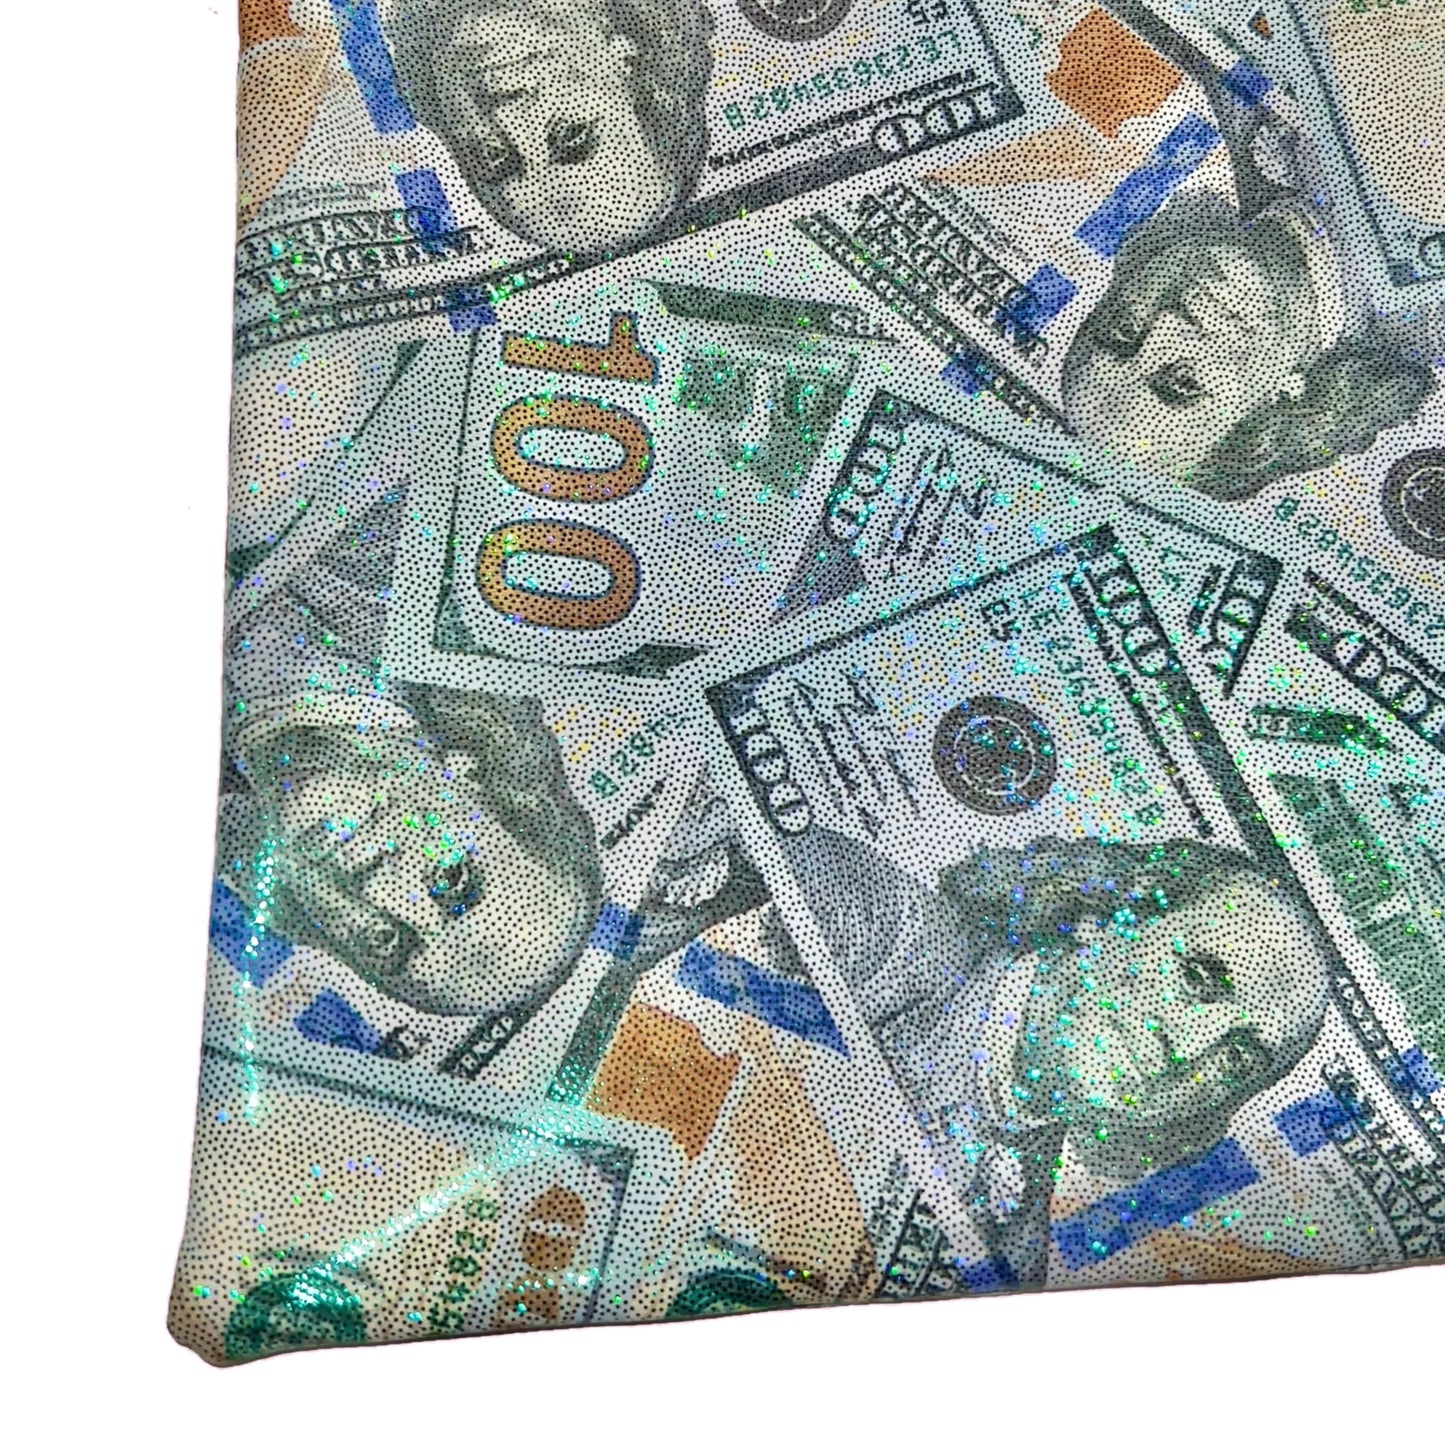 ACE Money Bag: HU$TLER Green Sparkly Money